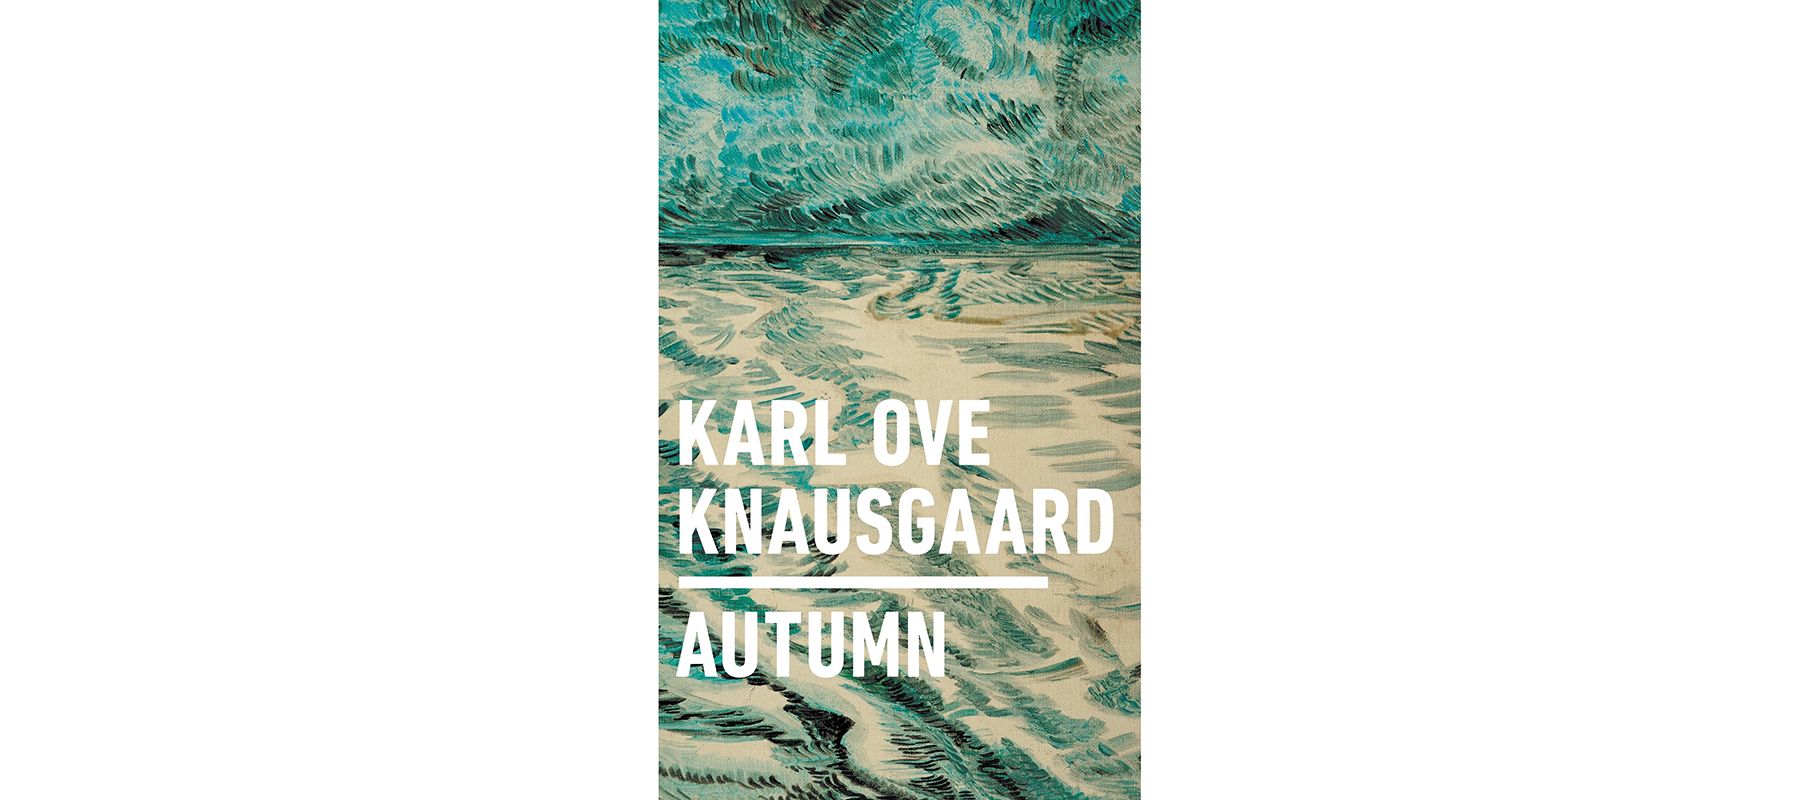 Copertina di Autunno, di Karl Ove Knausgaard